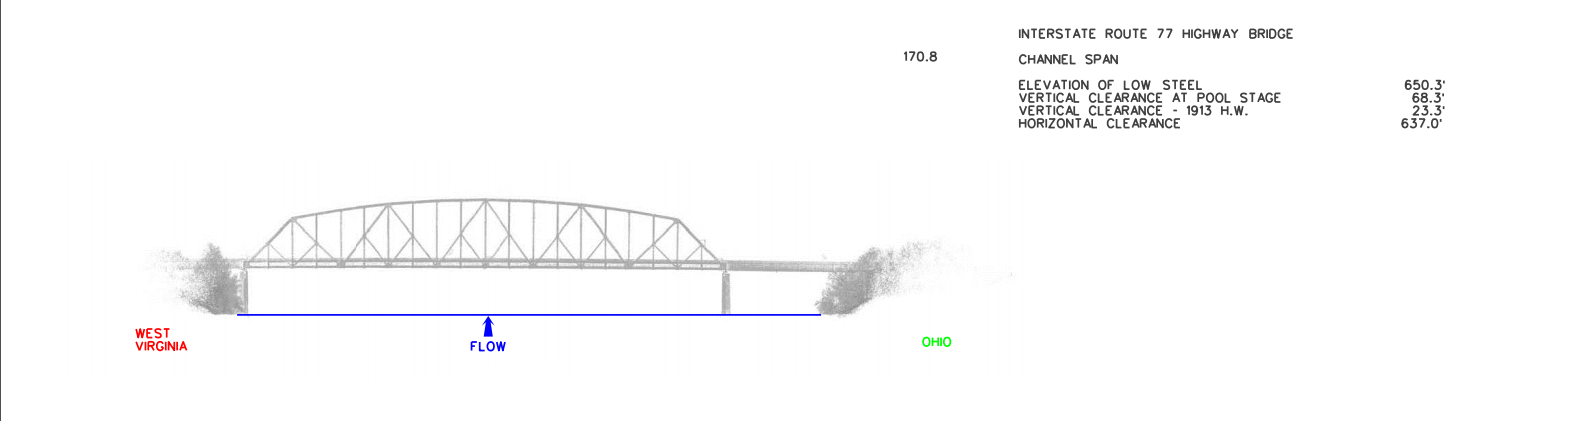 Interstate Route 77 Hwy Bridge Clearances | Bridge Calculator LLC